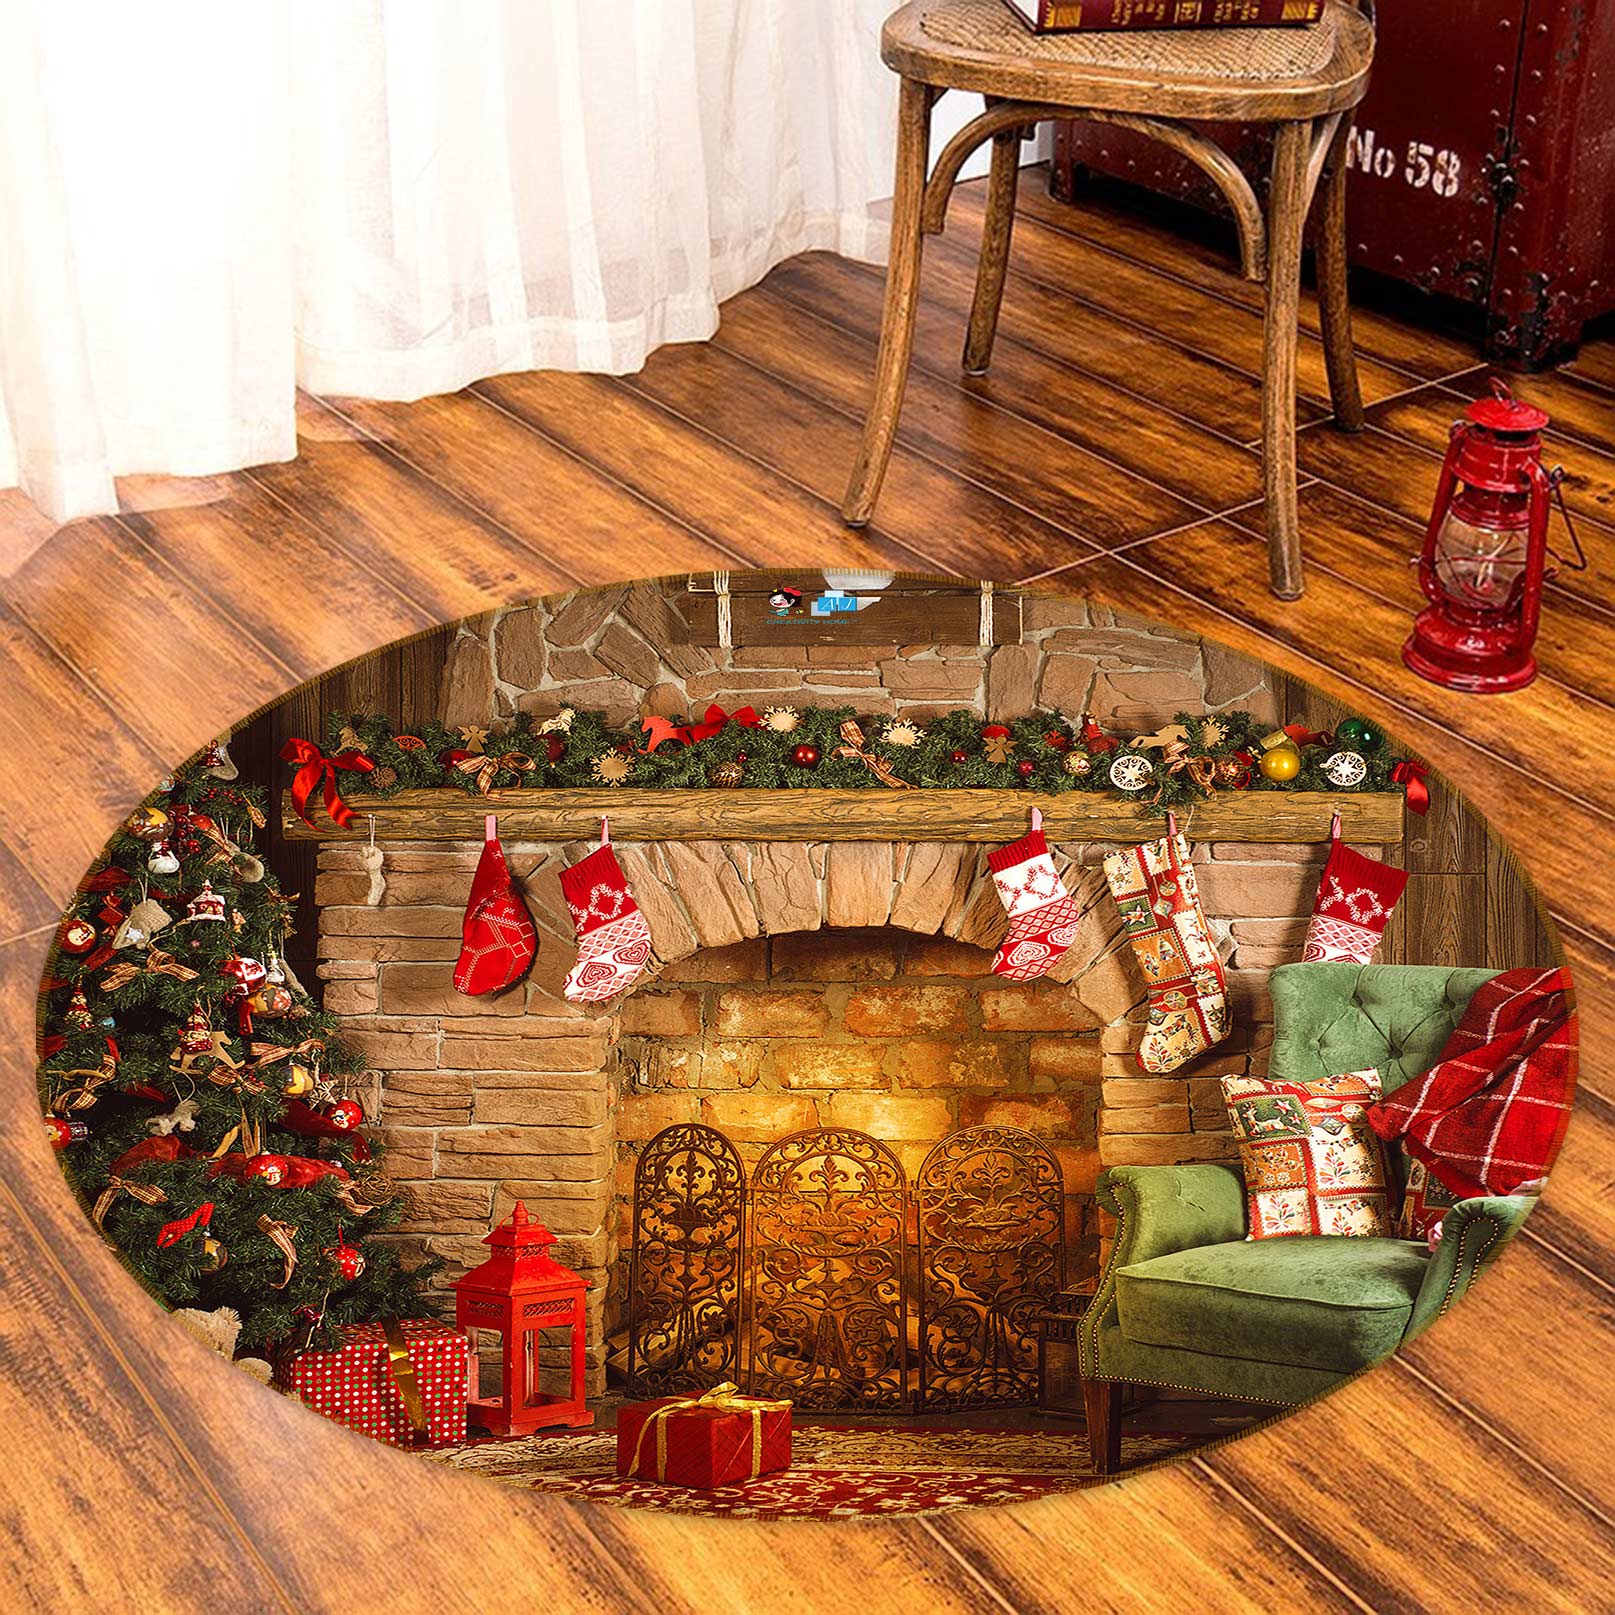 3D Fireplace Tree Sofa 54038 Christmas Round Non Slip Rug Mat Xmas